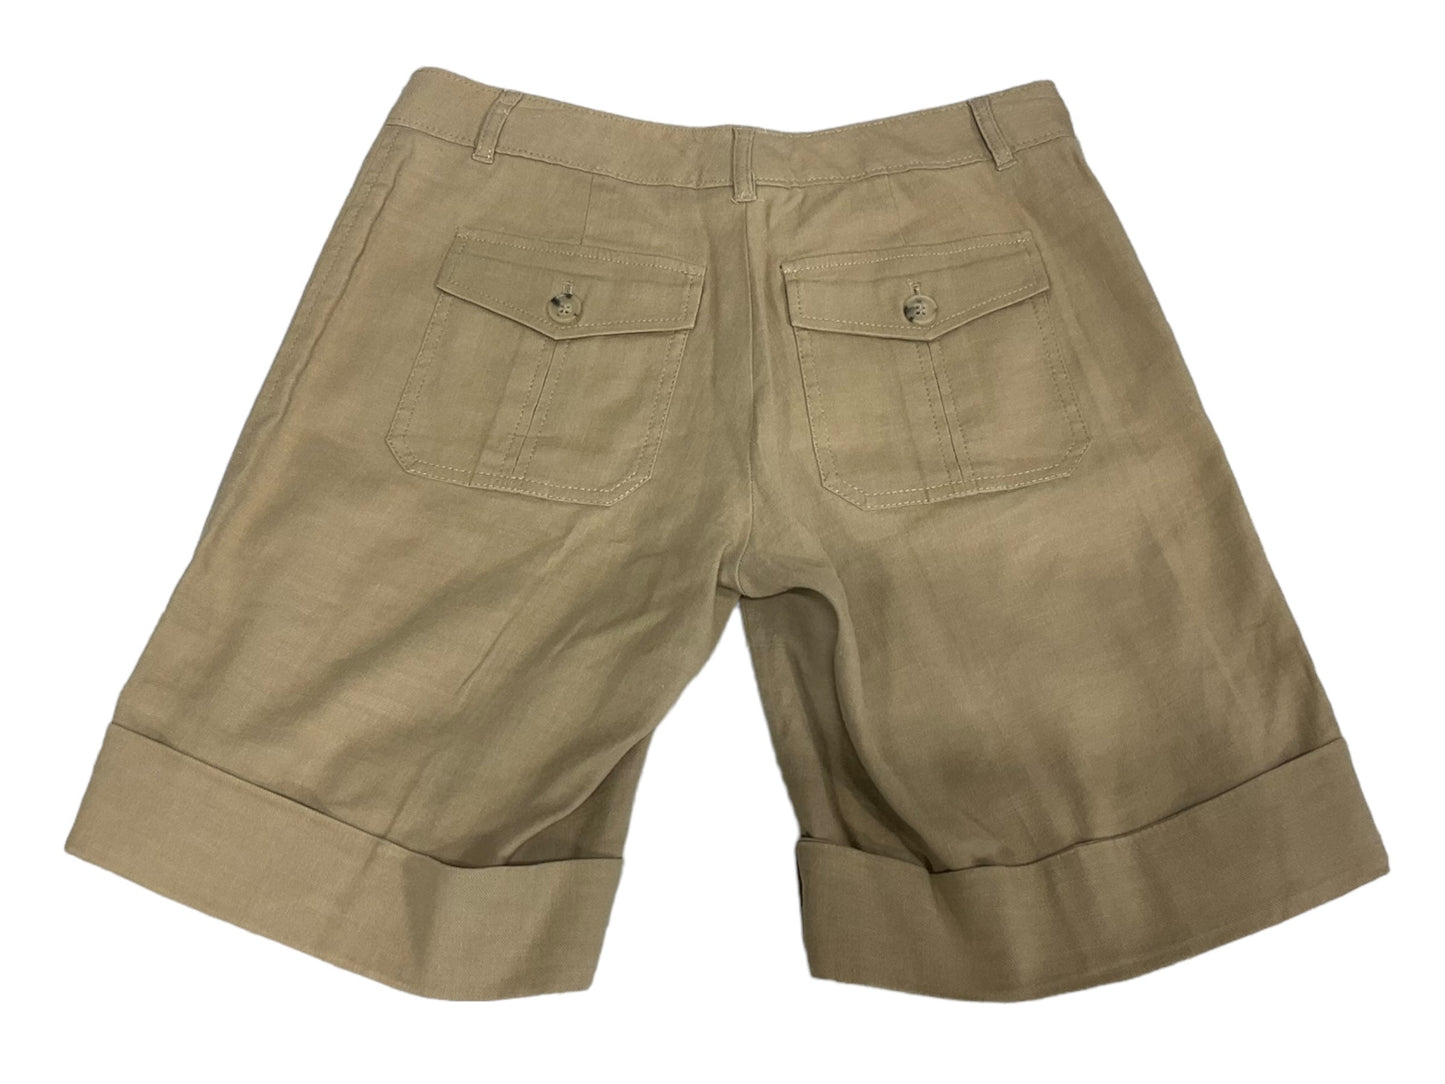 Tan Shorts Theory, Size 8